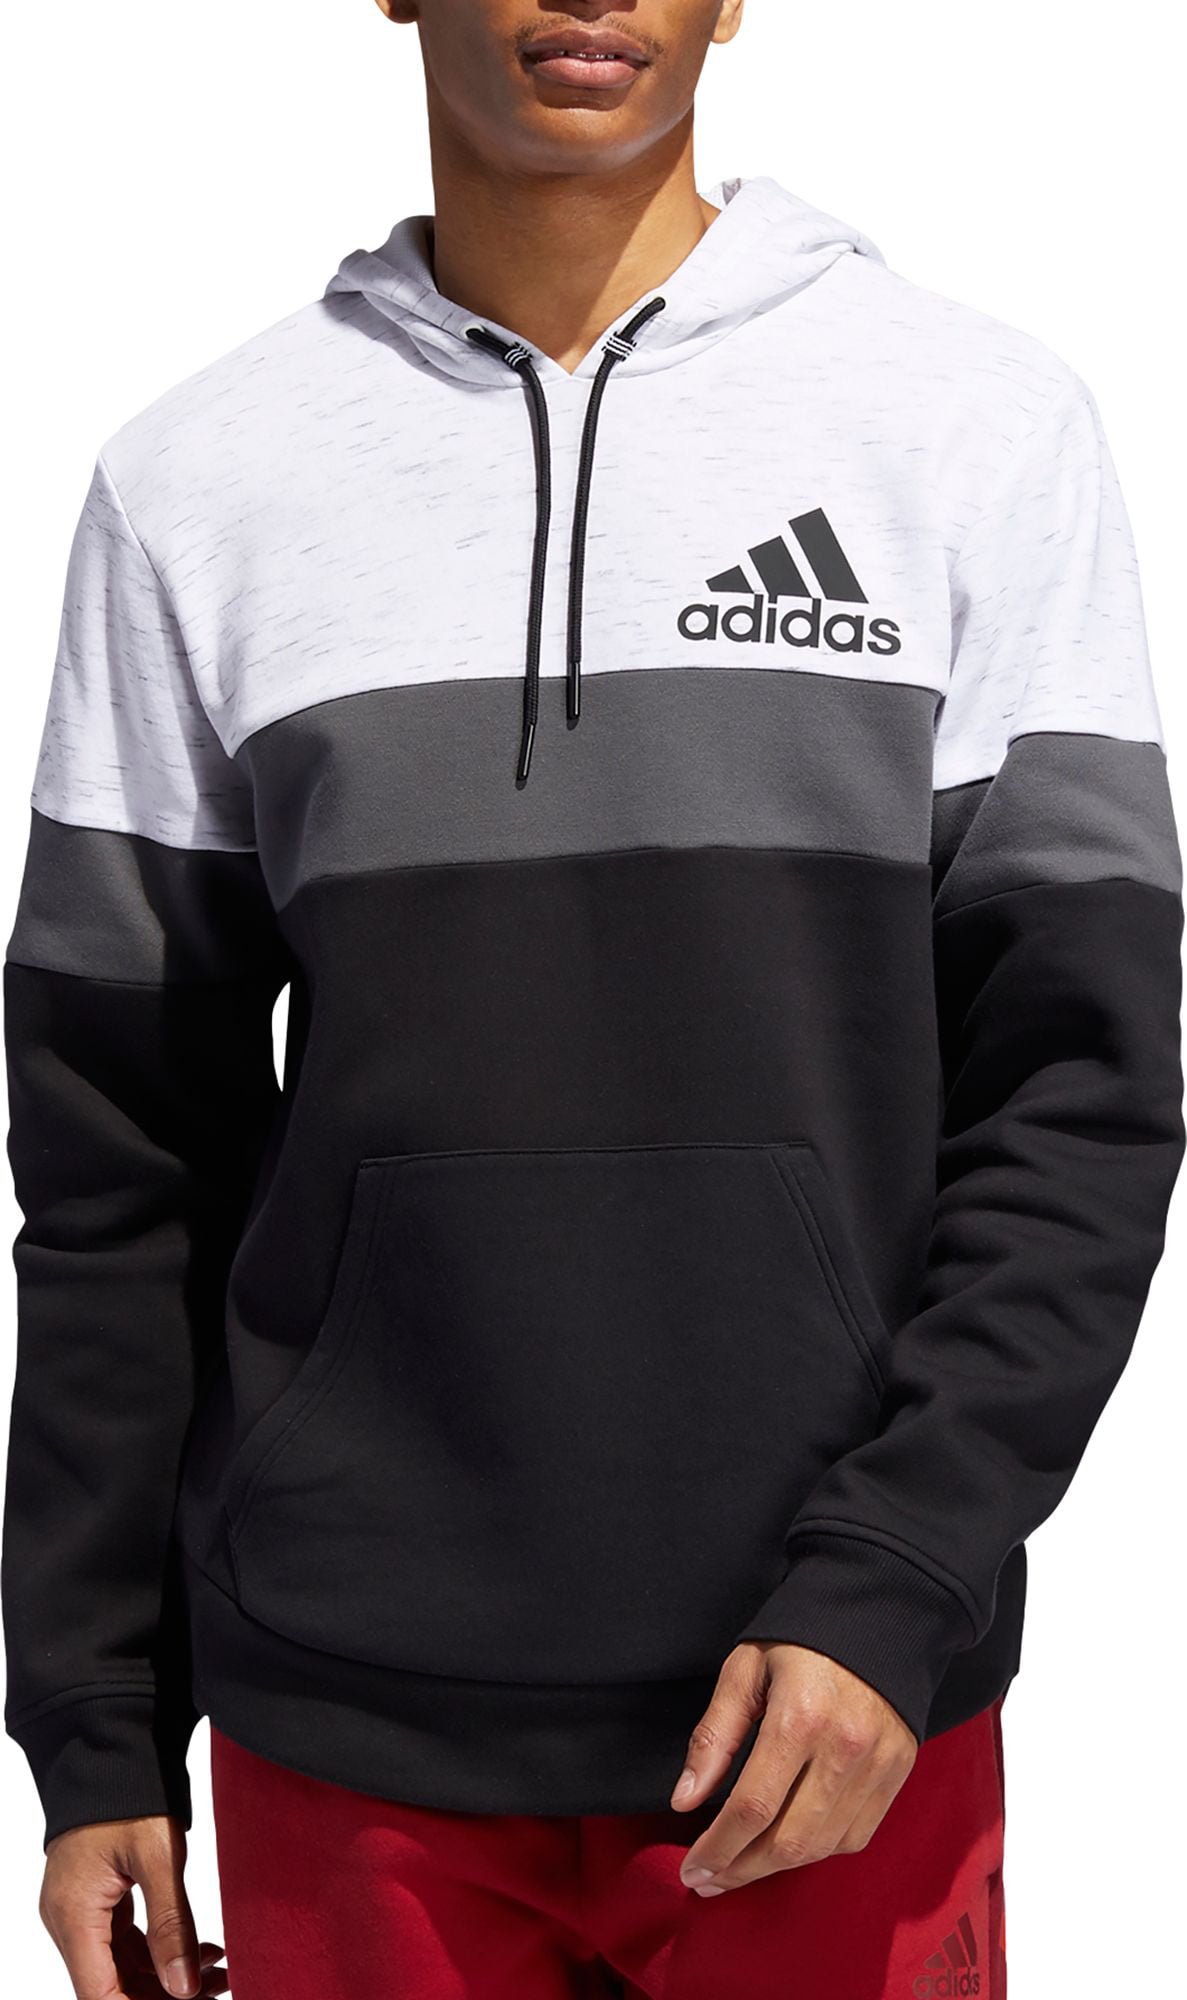 adidas men's post game retro hoodie